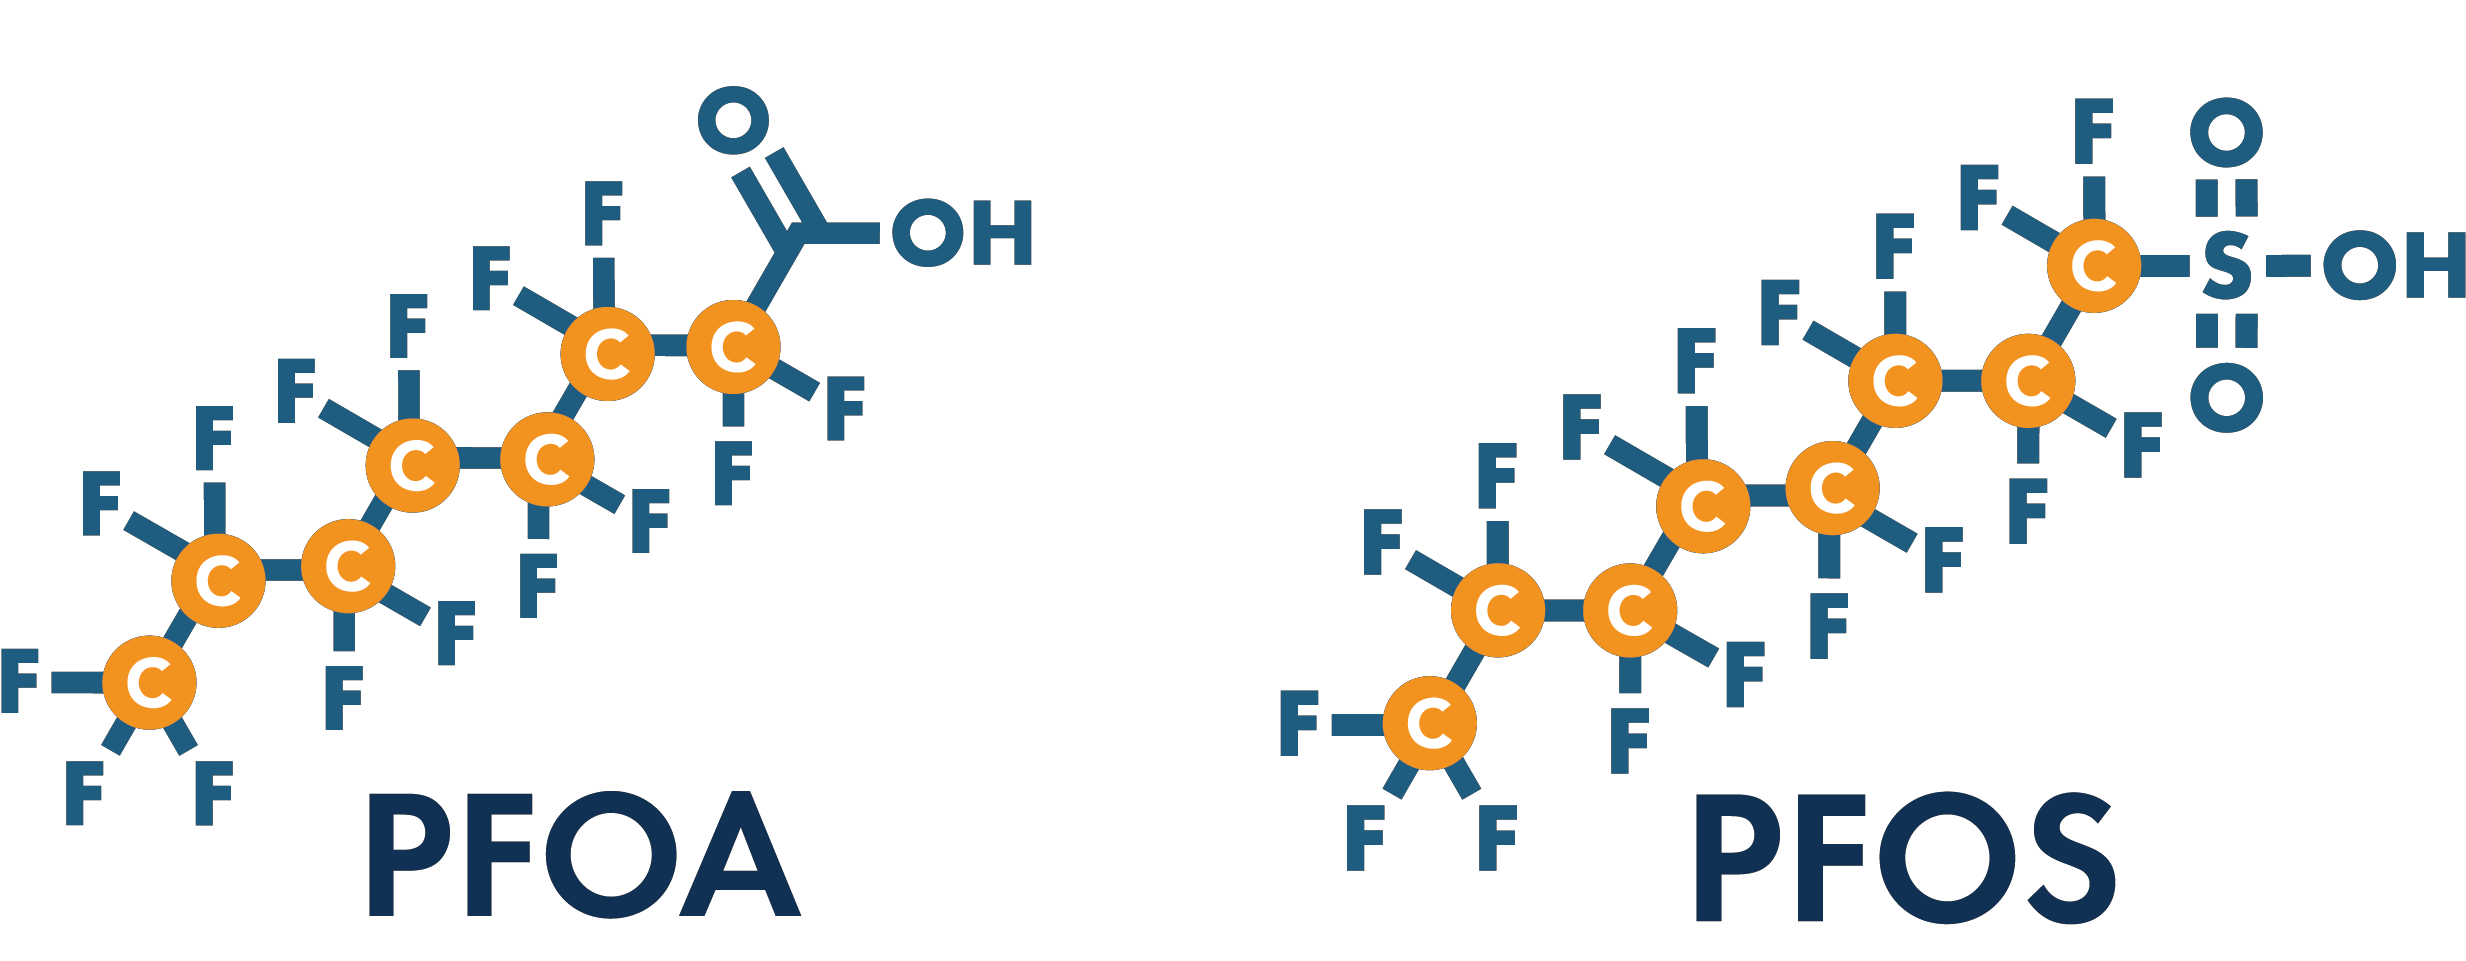 PFAS-Graphics-PFOA-PFOS What are Per- and Polyfluoroalkyl Substances (PFAS)?